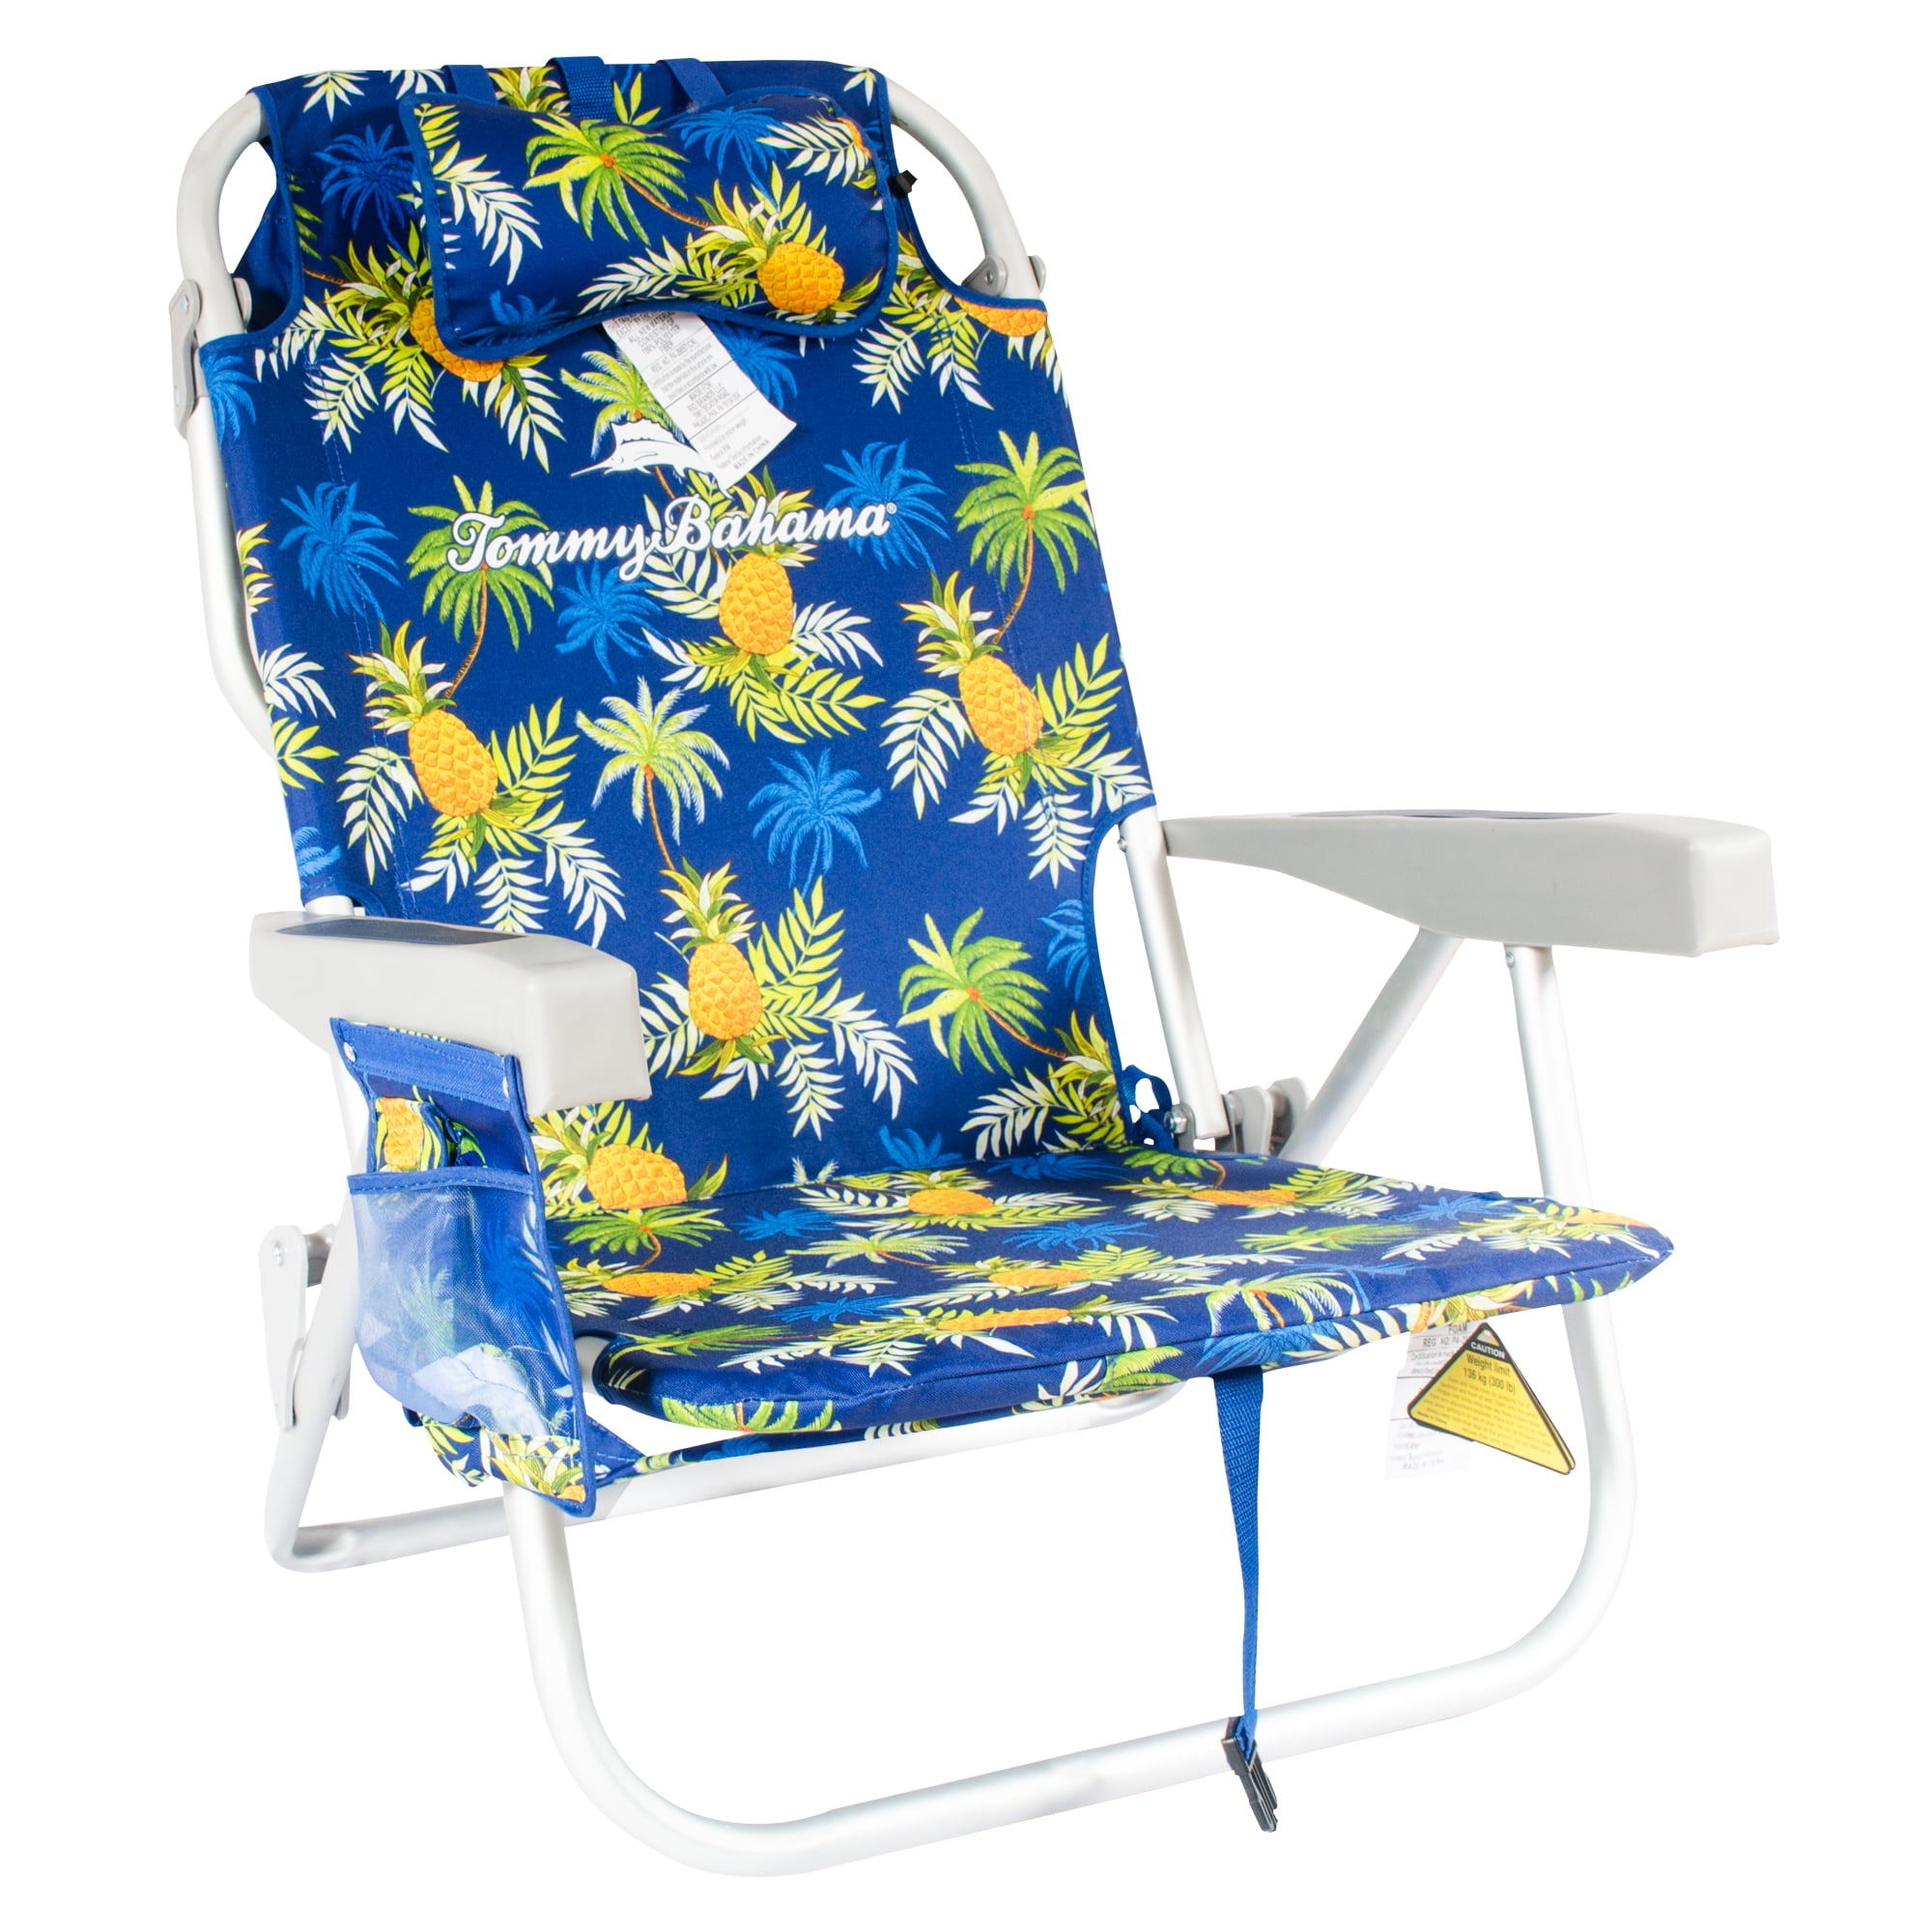 Modern Beach Chairs Australia Target for Simple Design